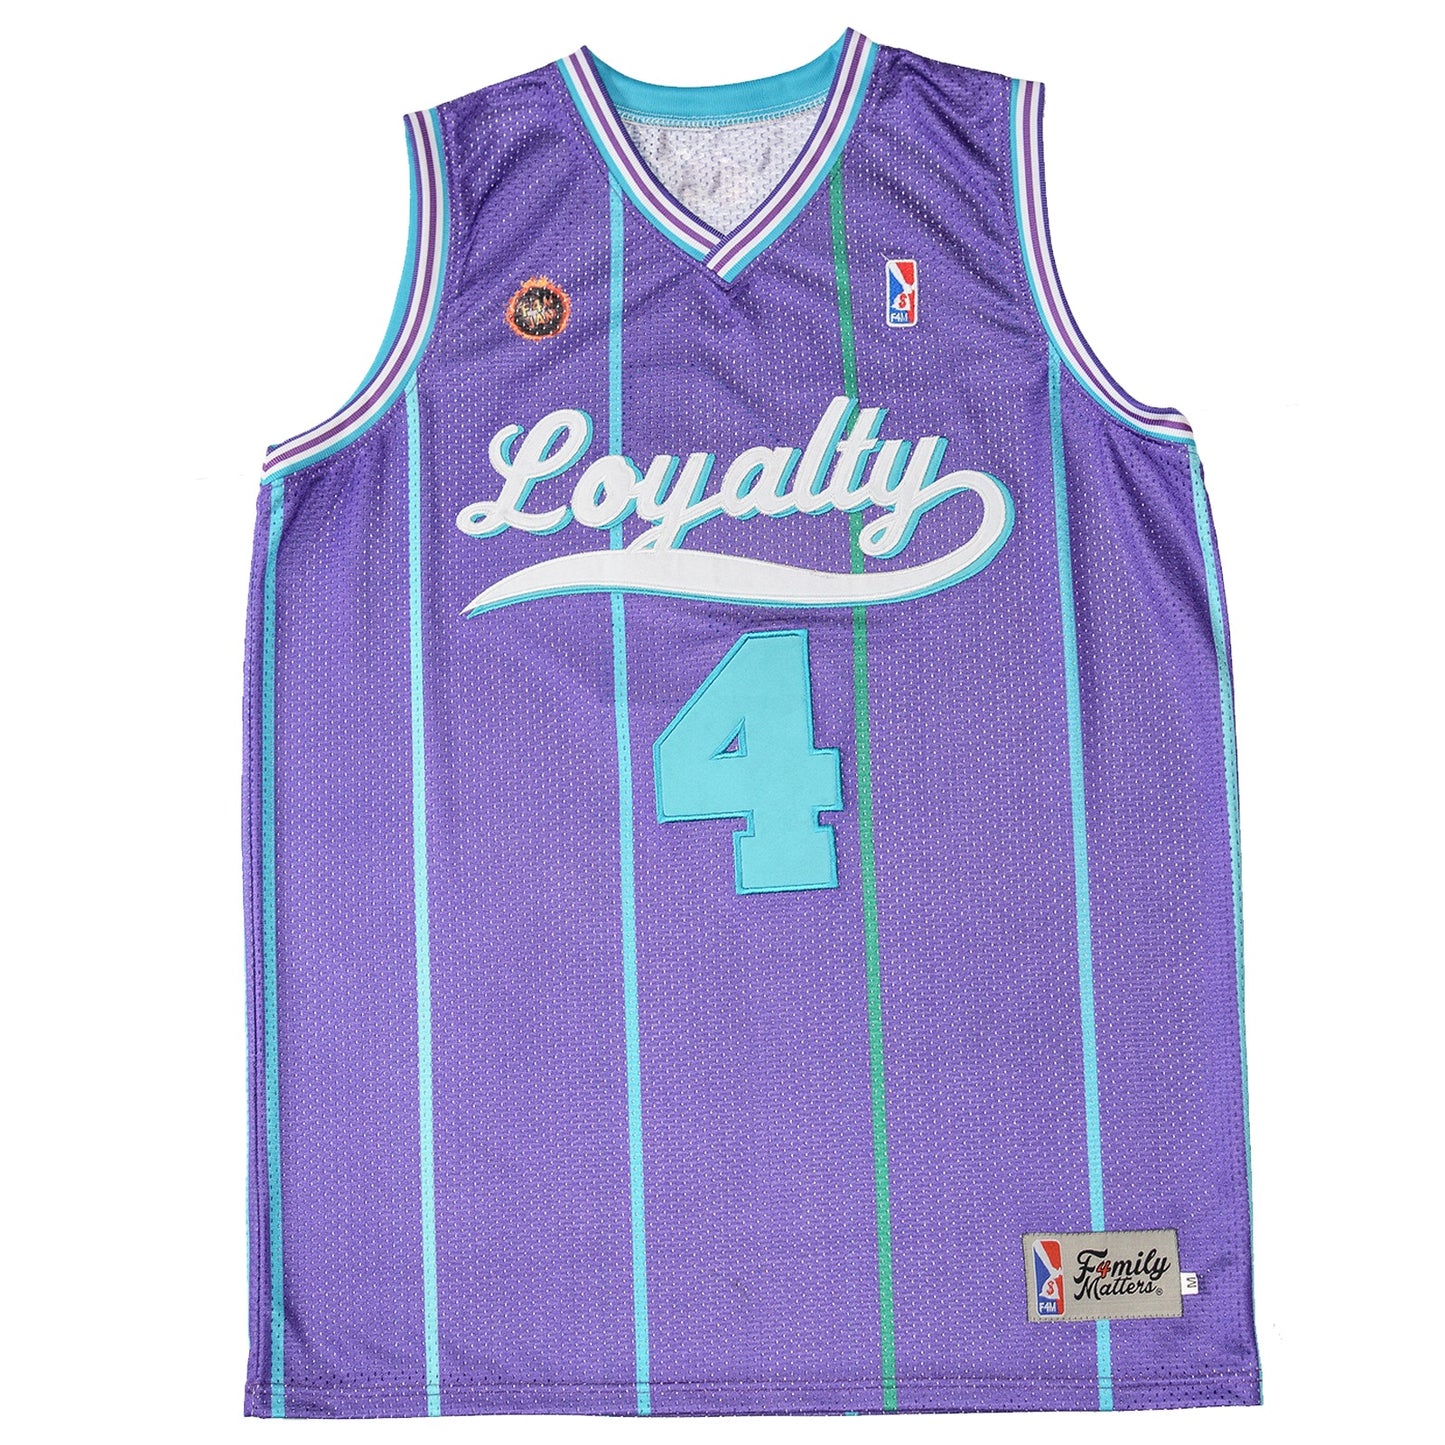 The Loyalty Basketball Jersey in Purple